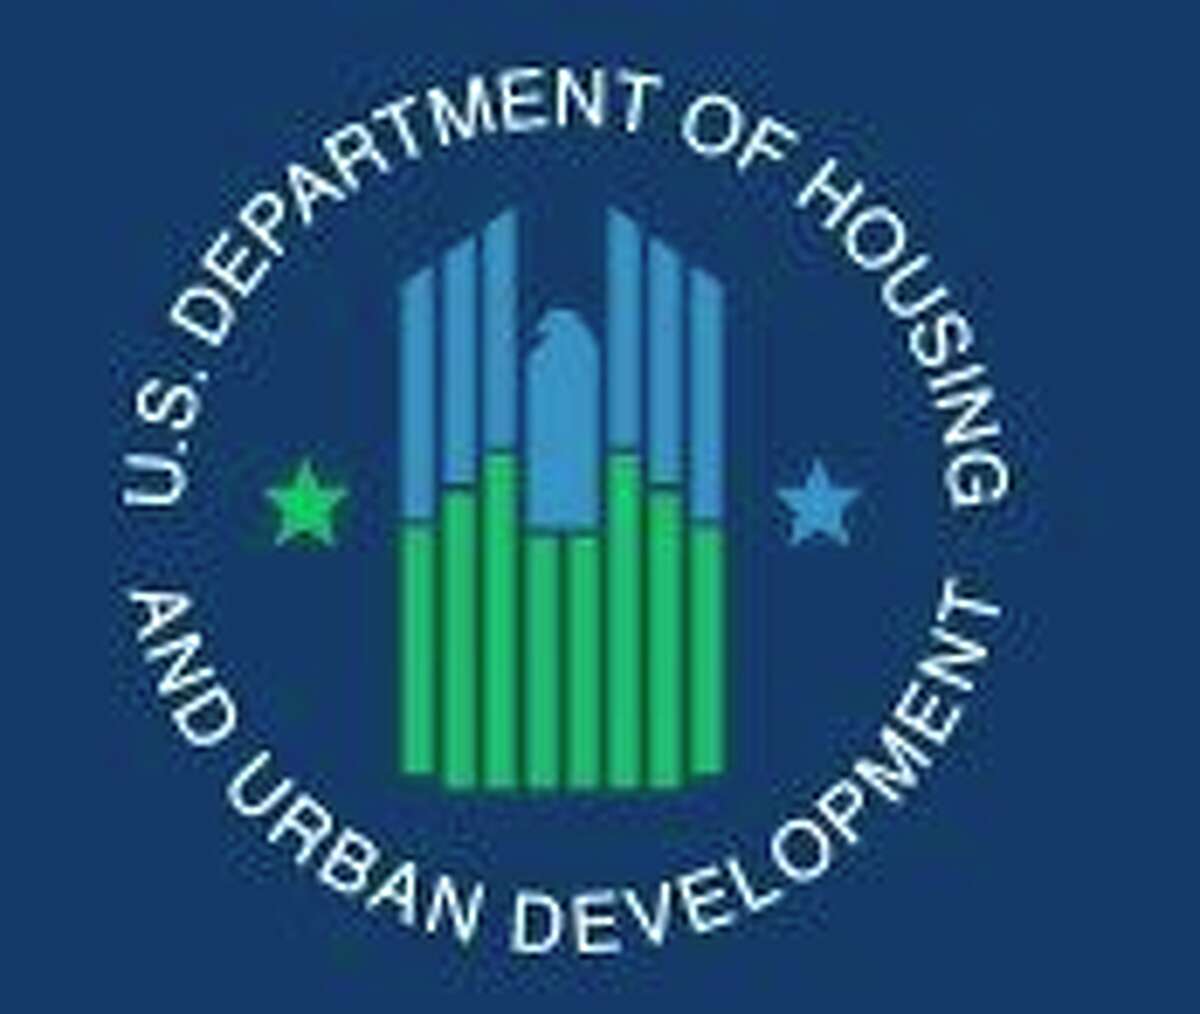 section 8 housing logo